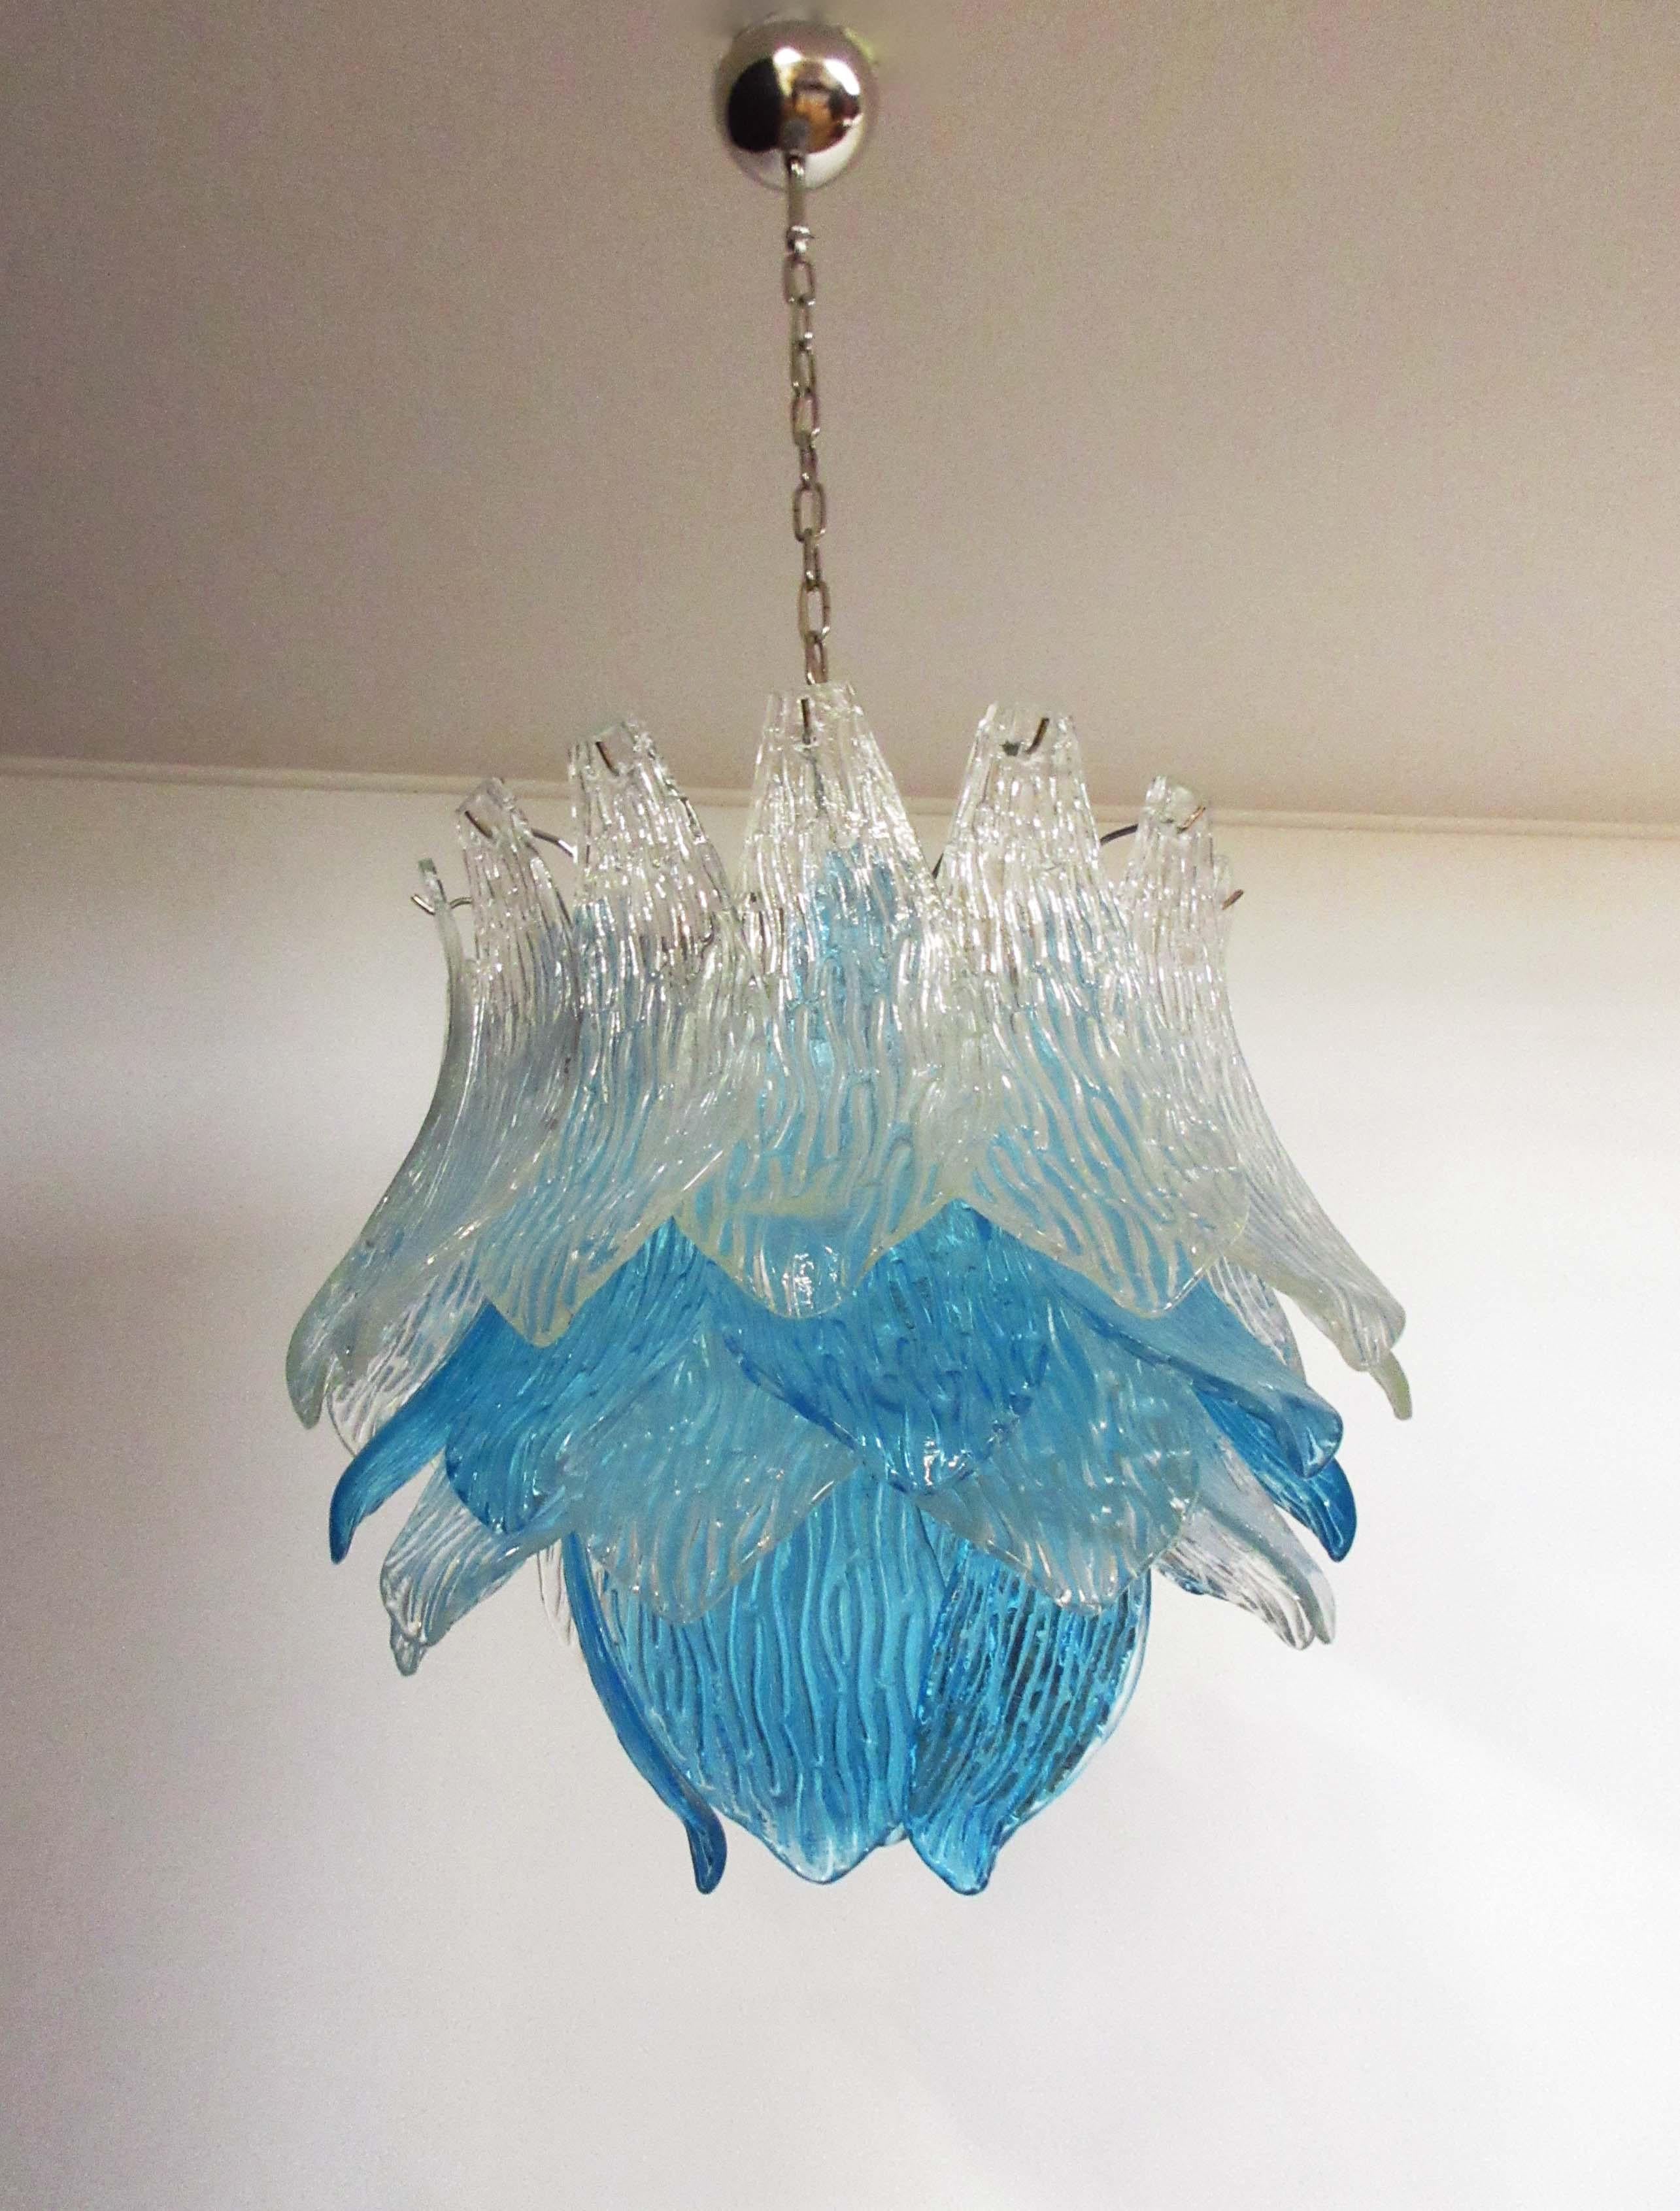 Mid-Century Modern Italian vintage Murano Glass chandelier - 38 glasses - blue and trasparent